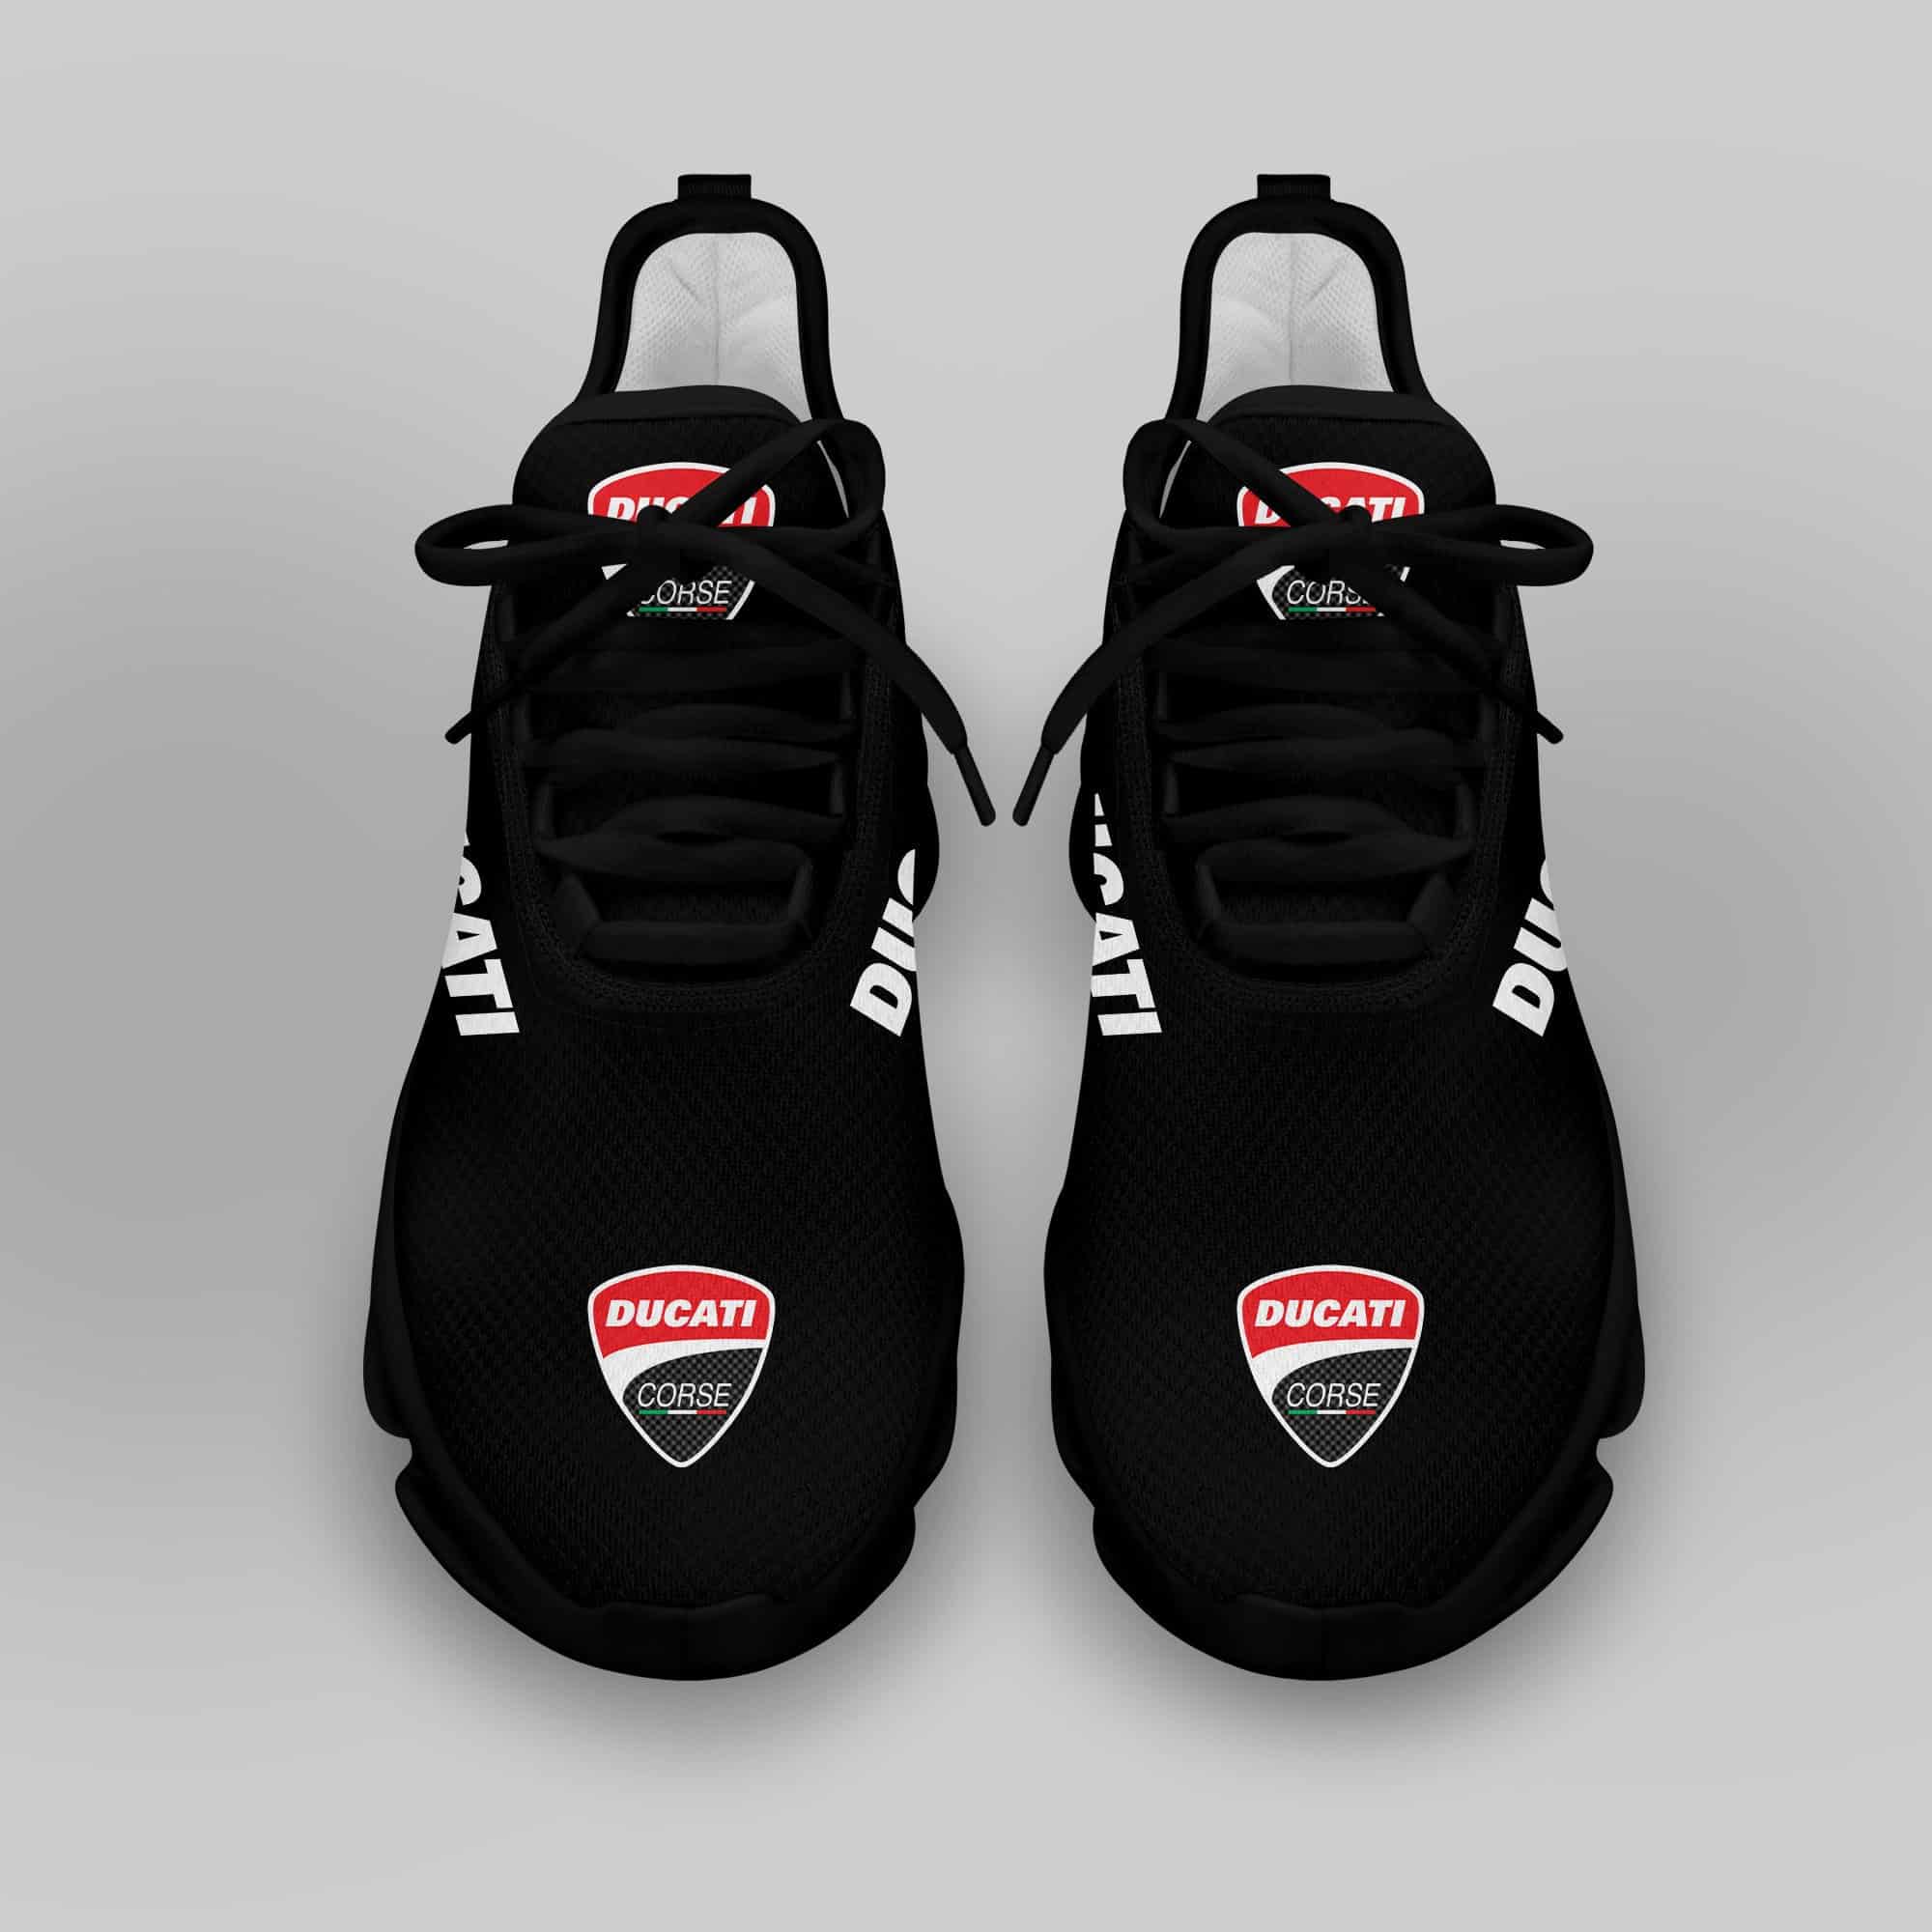 Ducati Racing Running Shoes Max Soul Shoes Sneakers Ver 37 4